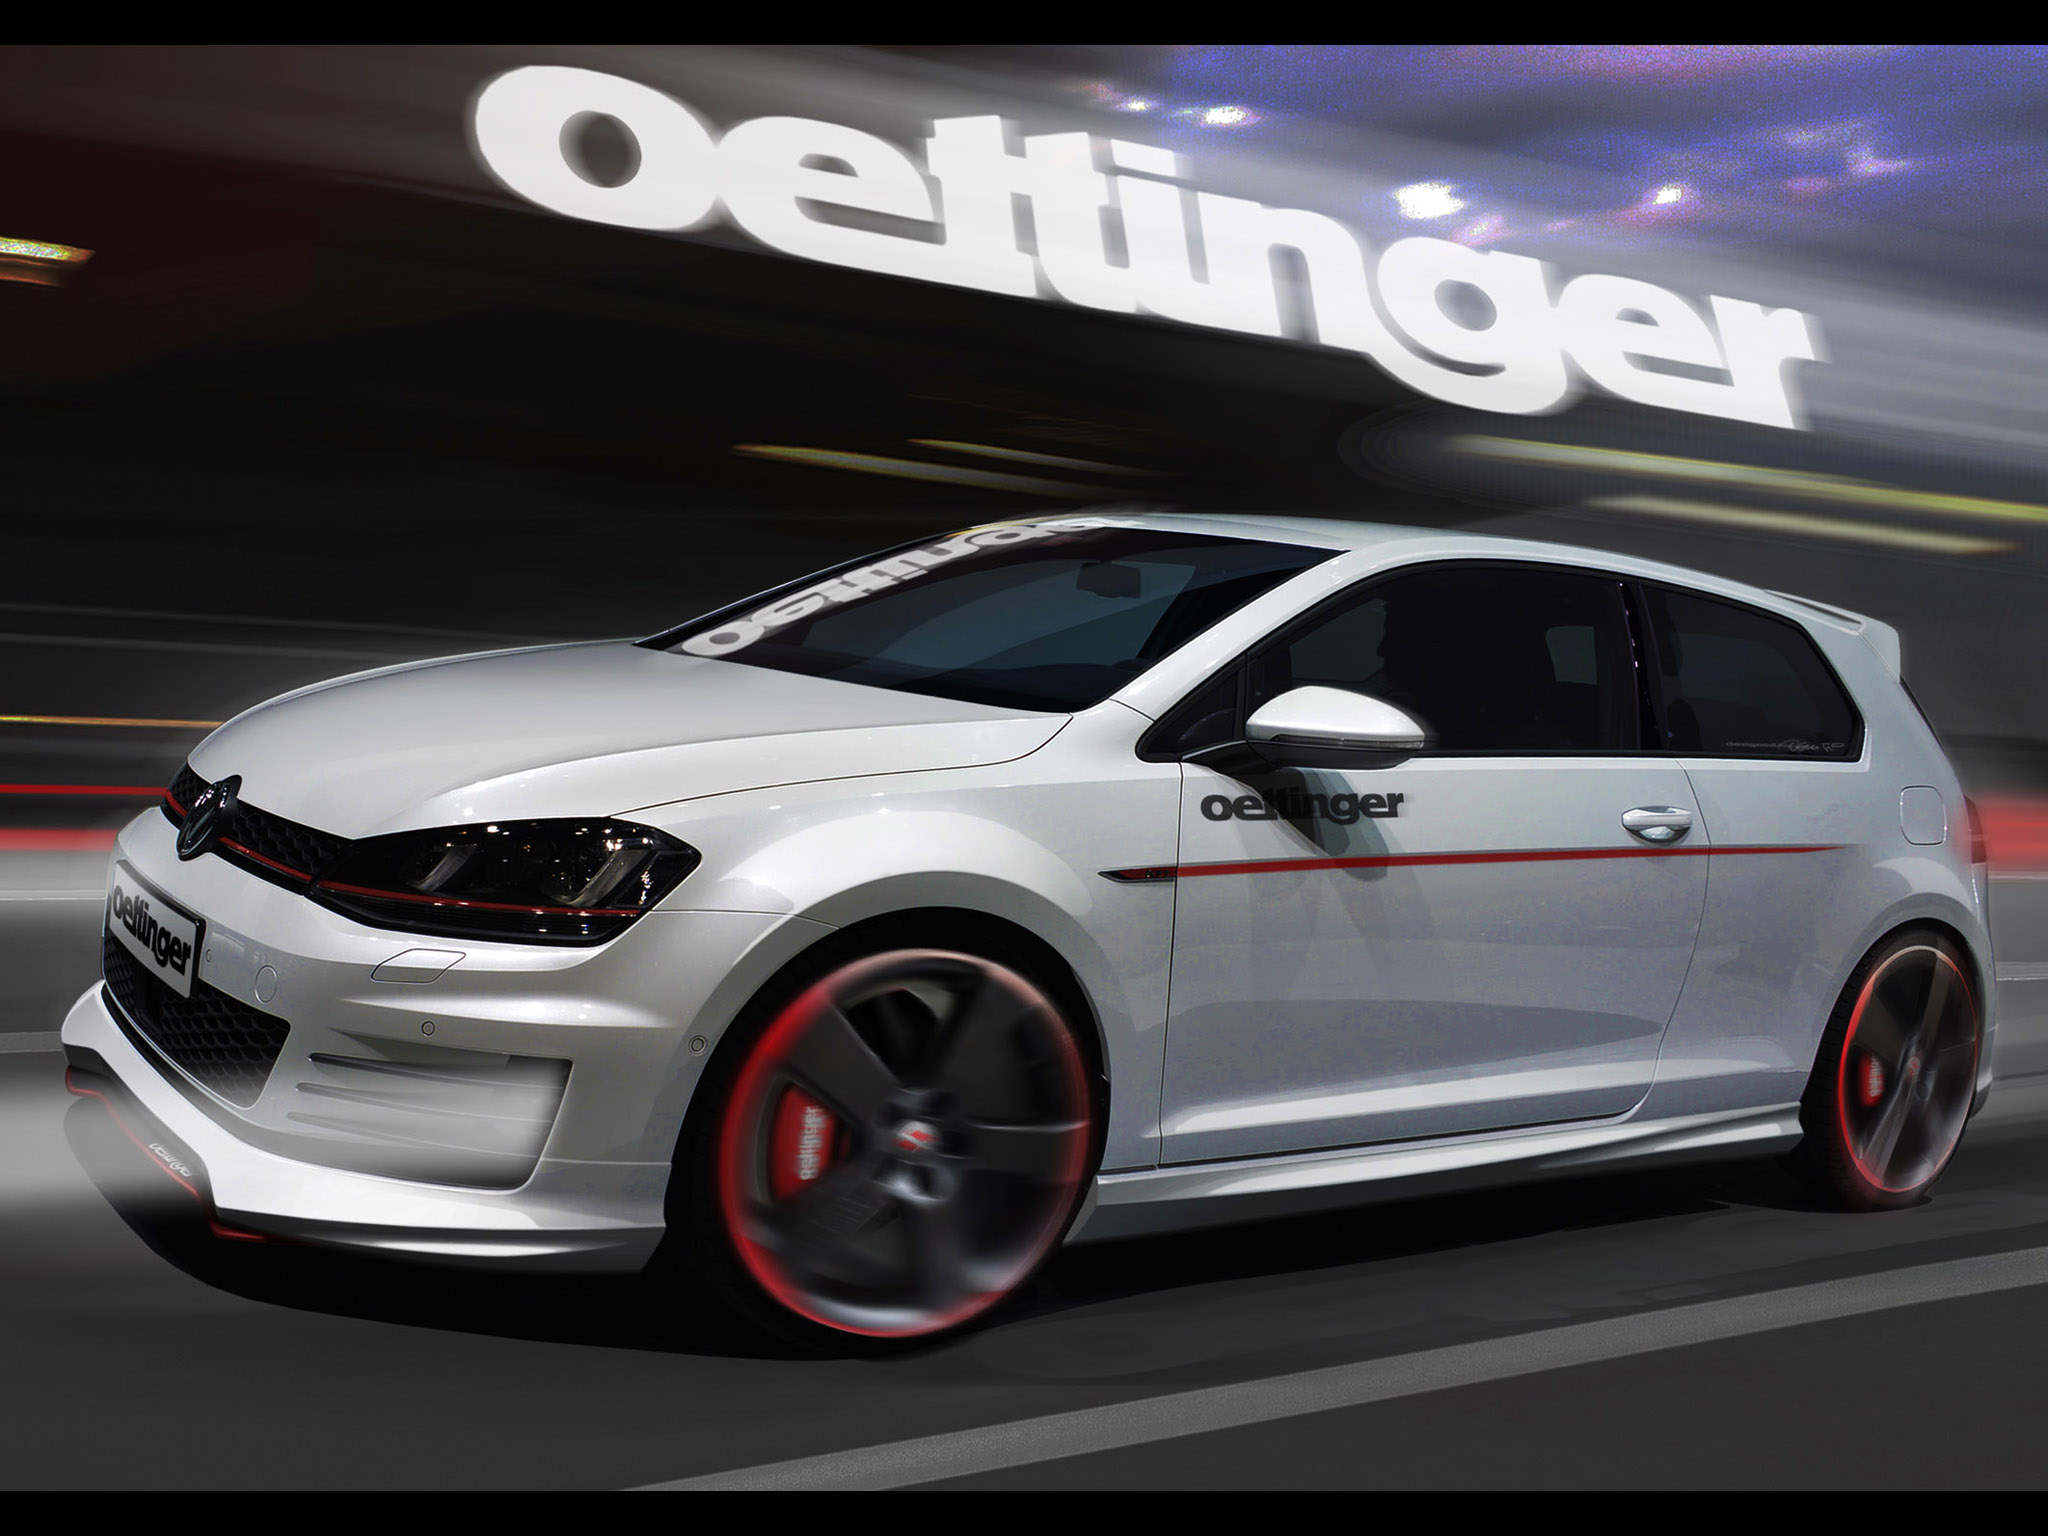 2013 Oettinger Volkswagen Golf GTI tuning wallpaper 2048x1536 2048x1536